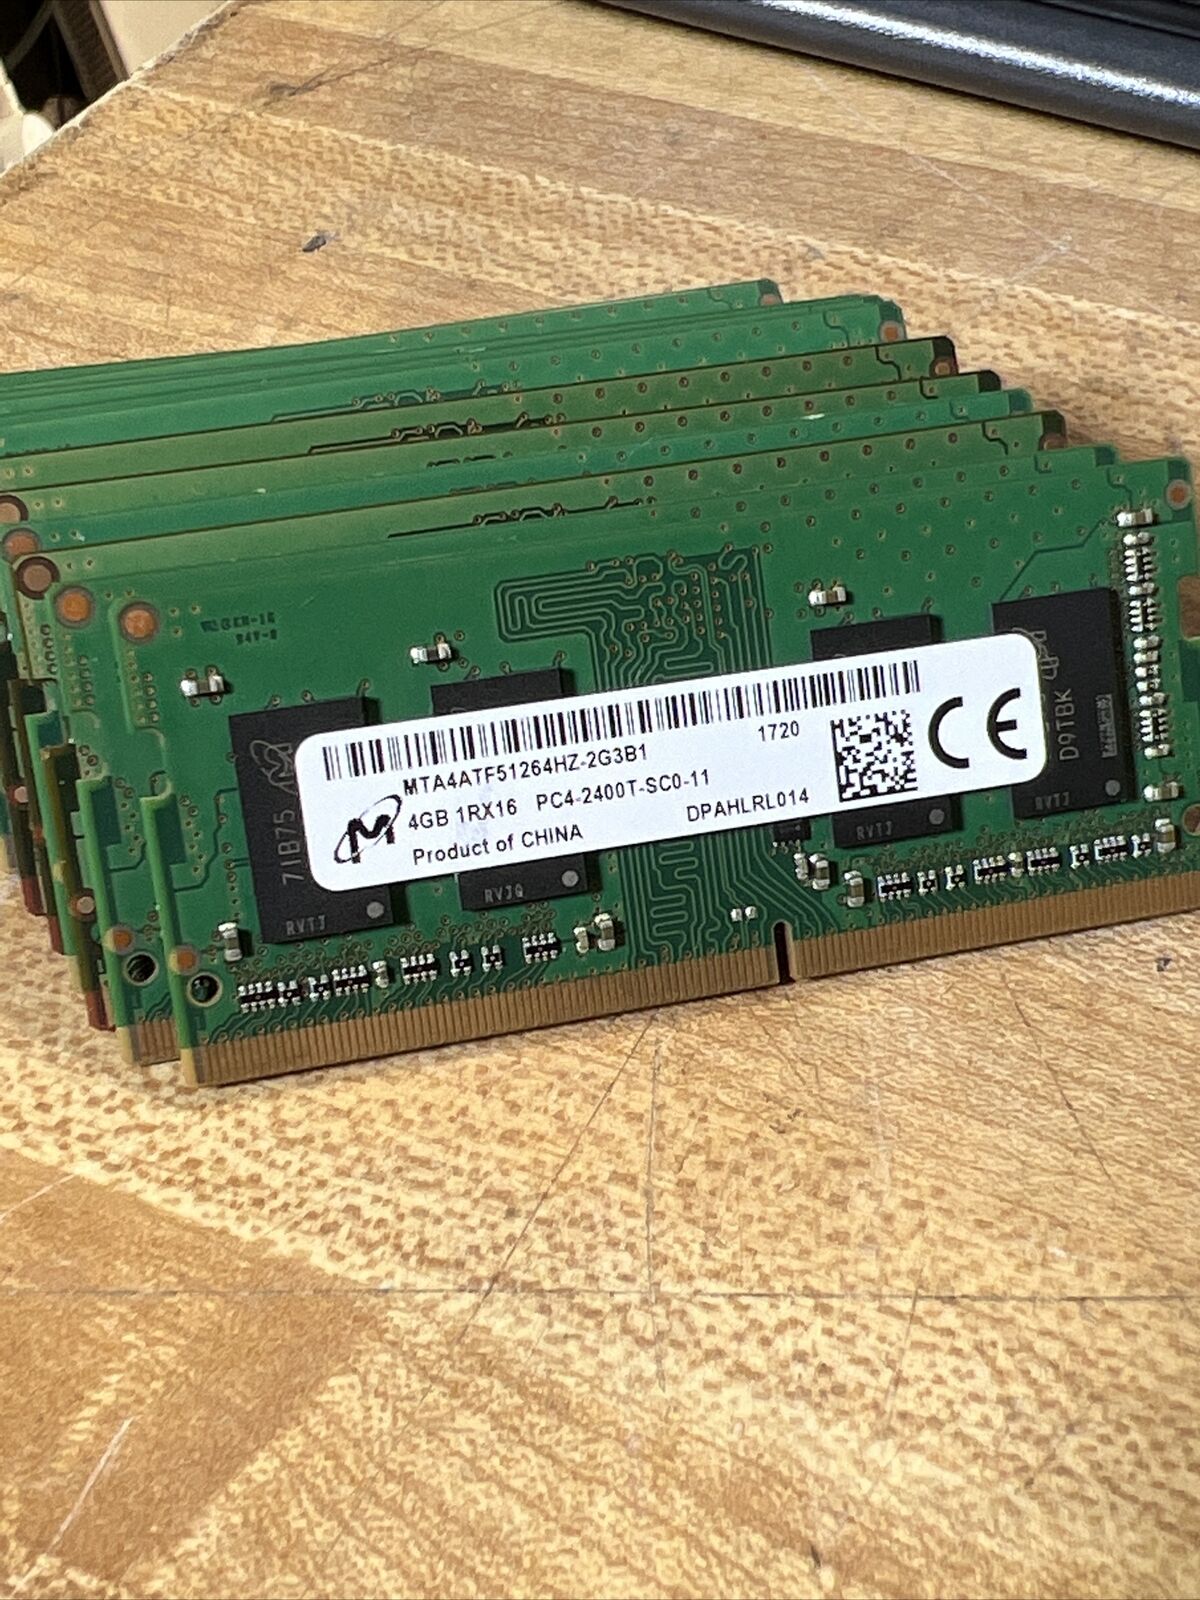 lot of 13 Micron 4GB 1Rx16 PC4 2400T Laptop Memory MTA4ATF51264HZ-2G3B1